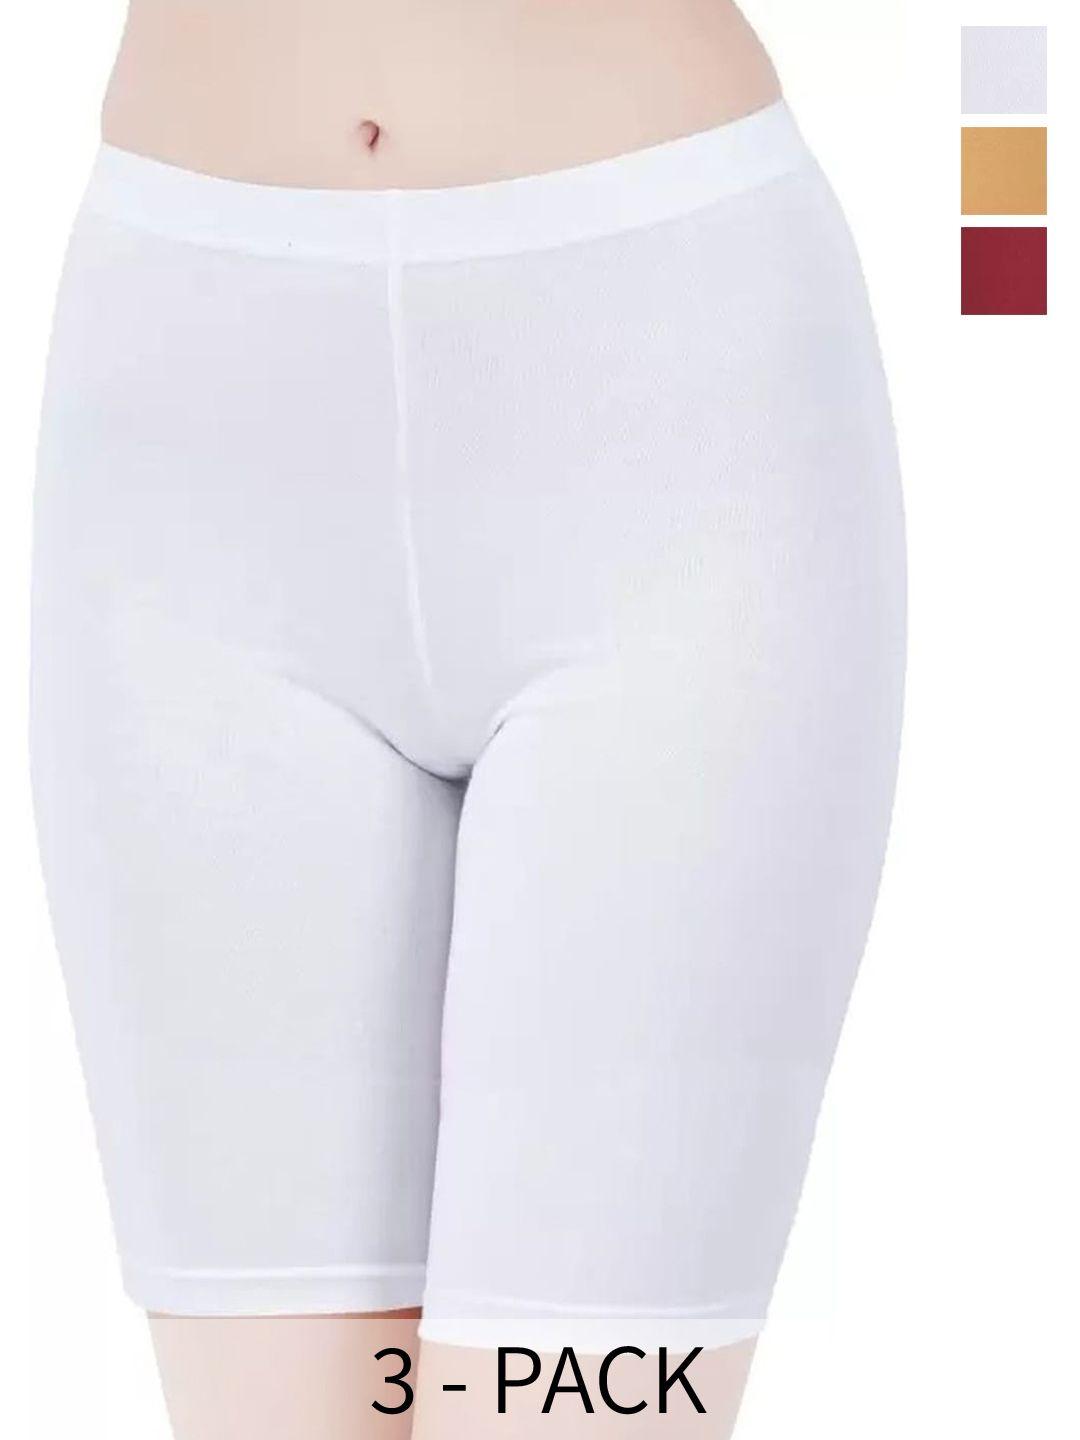 arla apparel pack of 3 pure cotton regular shorts